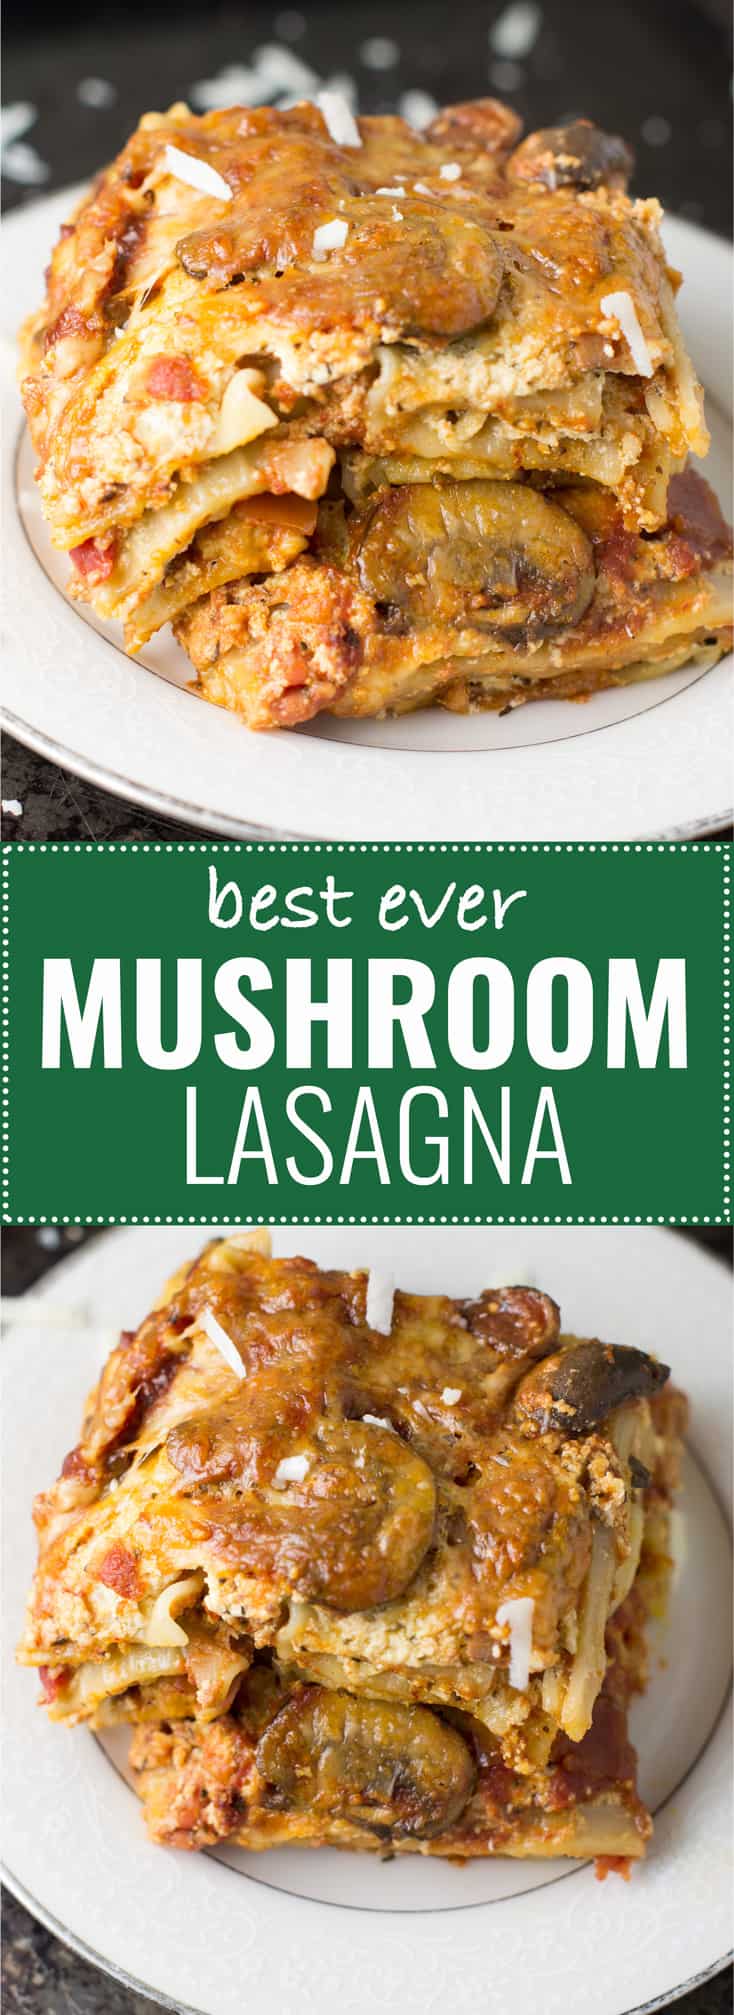 the best ever mushroom lasagna recipe (vegetarian.) Even meat eaters will love this one! #vegetarian #lasagna #meatless